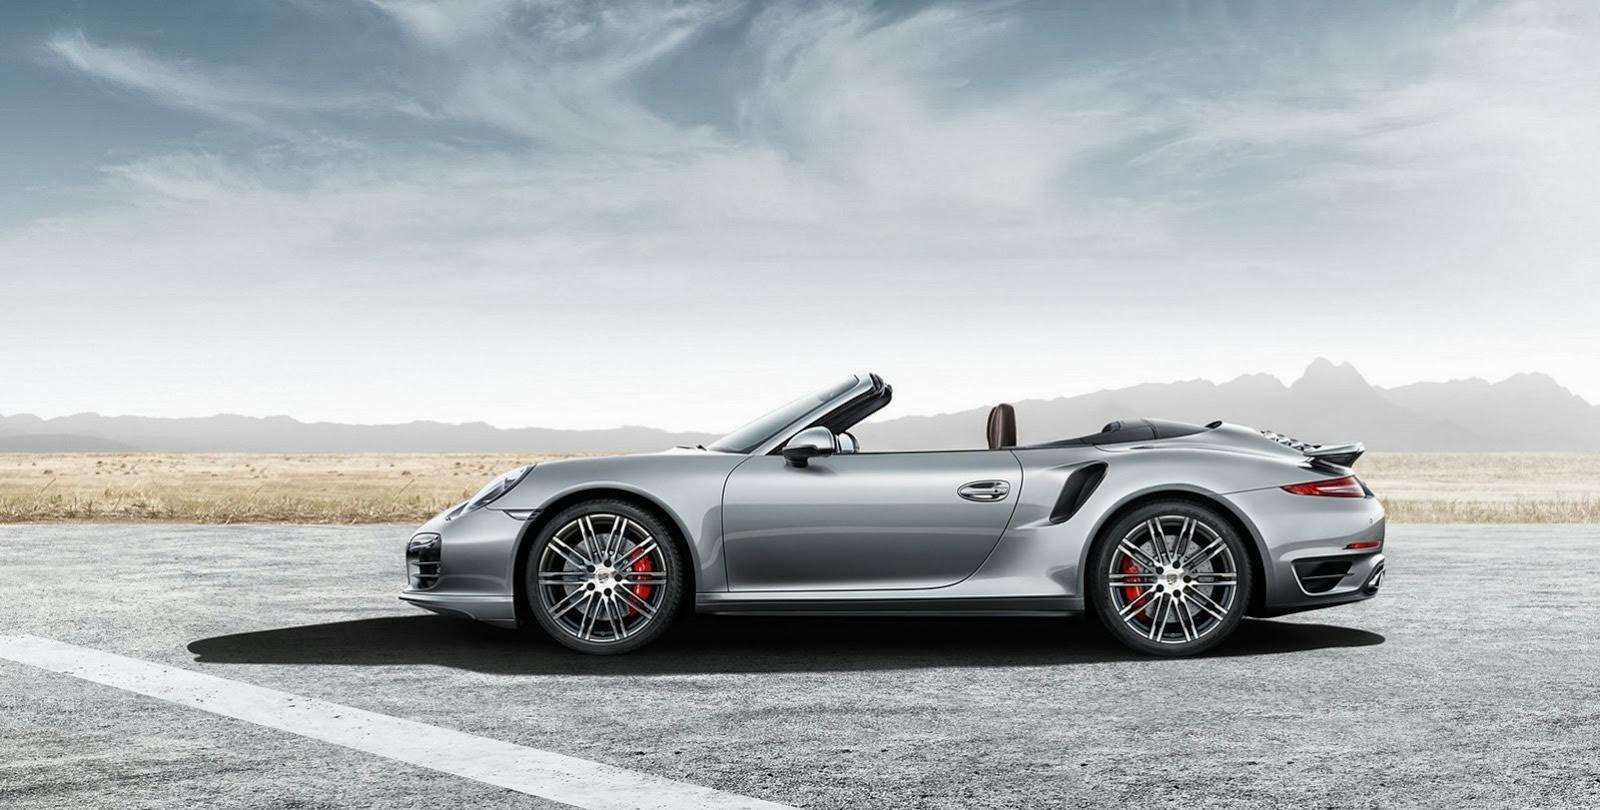 Porsche 911 2014 Convertib HD Wallpaper, Background Image